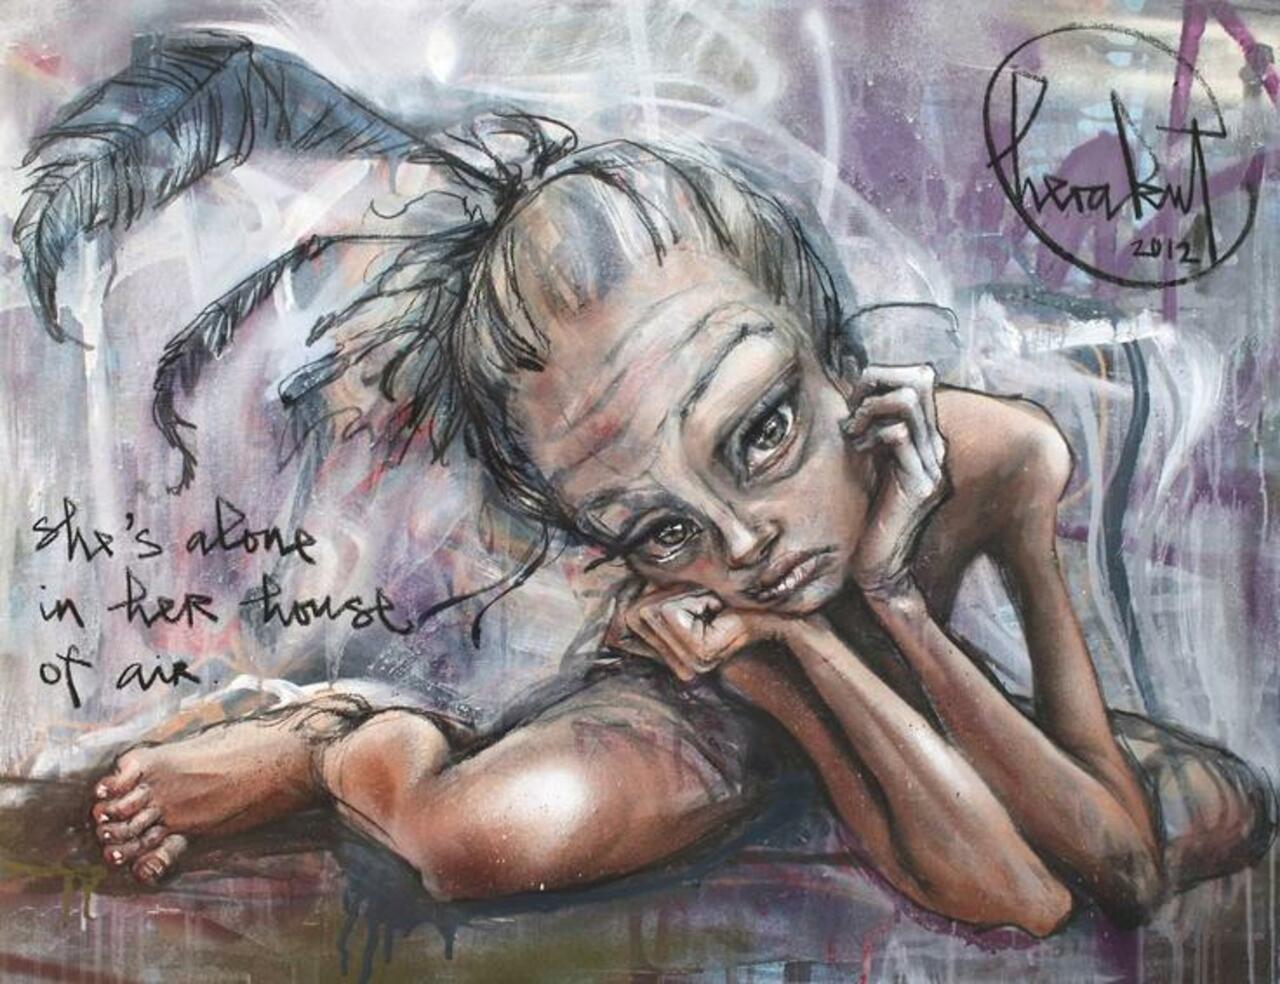 #Streetart #urbanart #graffiti #painting "She's alone in her house of air", 2012 by #artists Herakut (Hera and Akut) http://t.co/AMvekL60XA